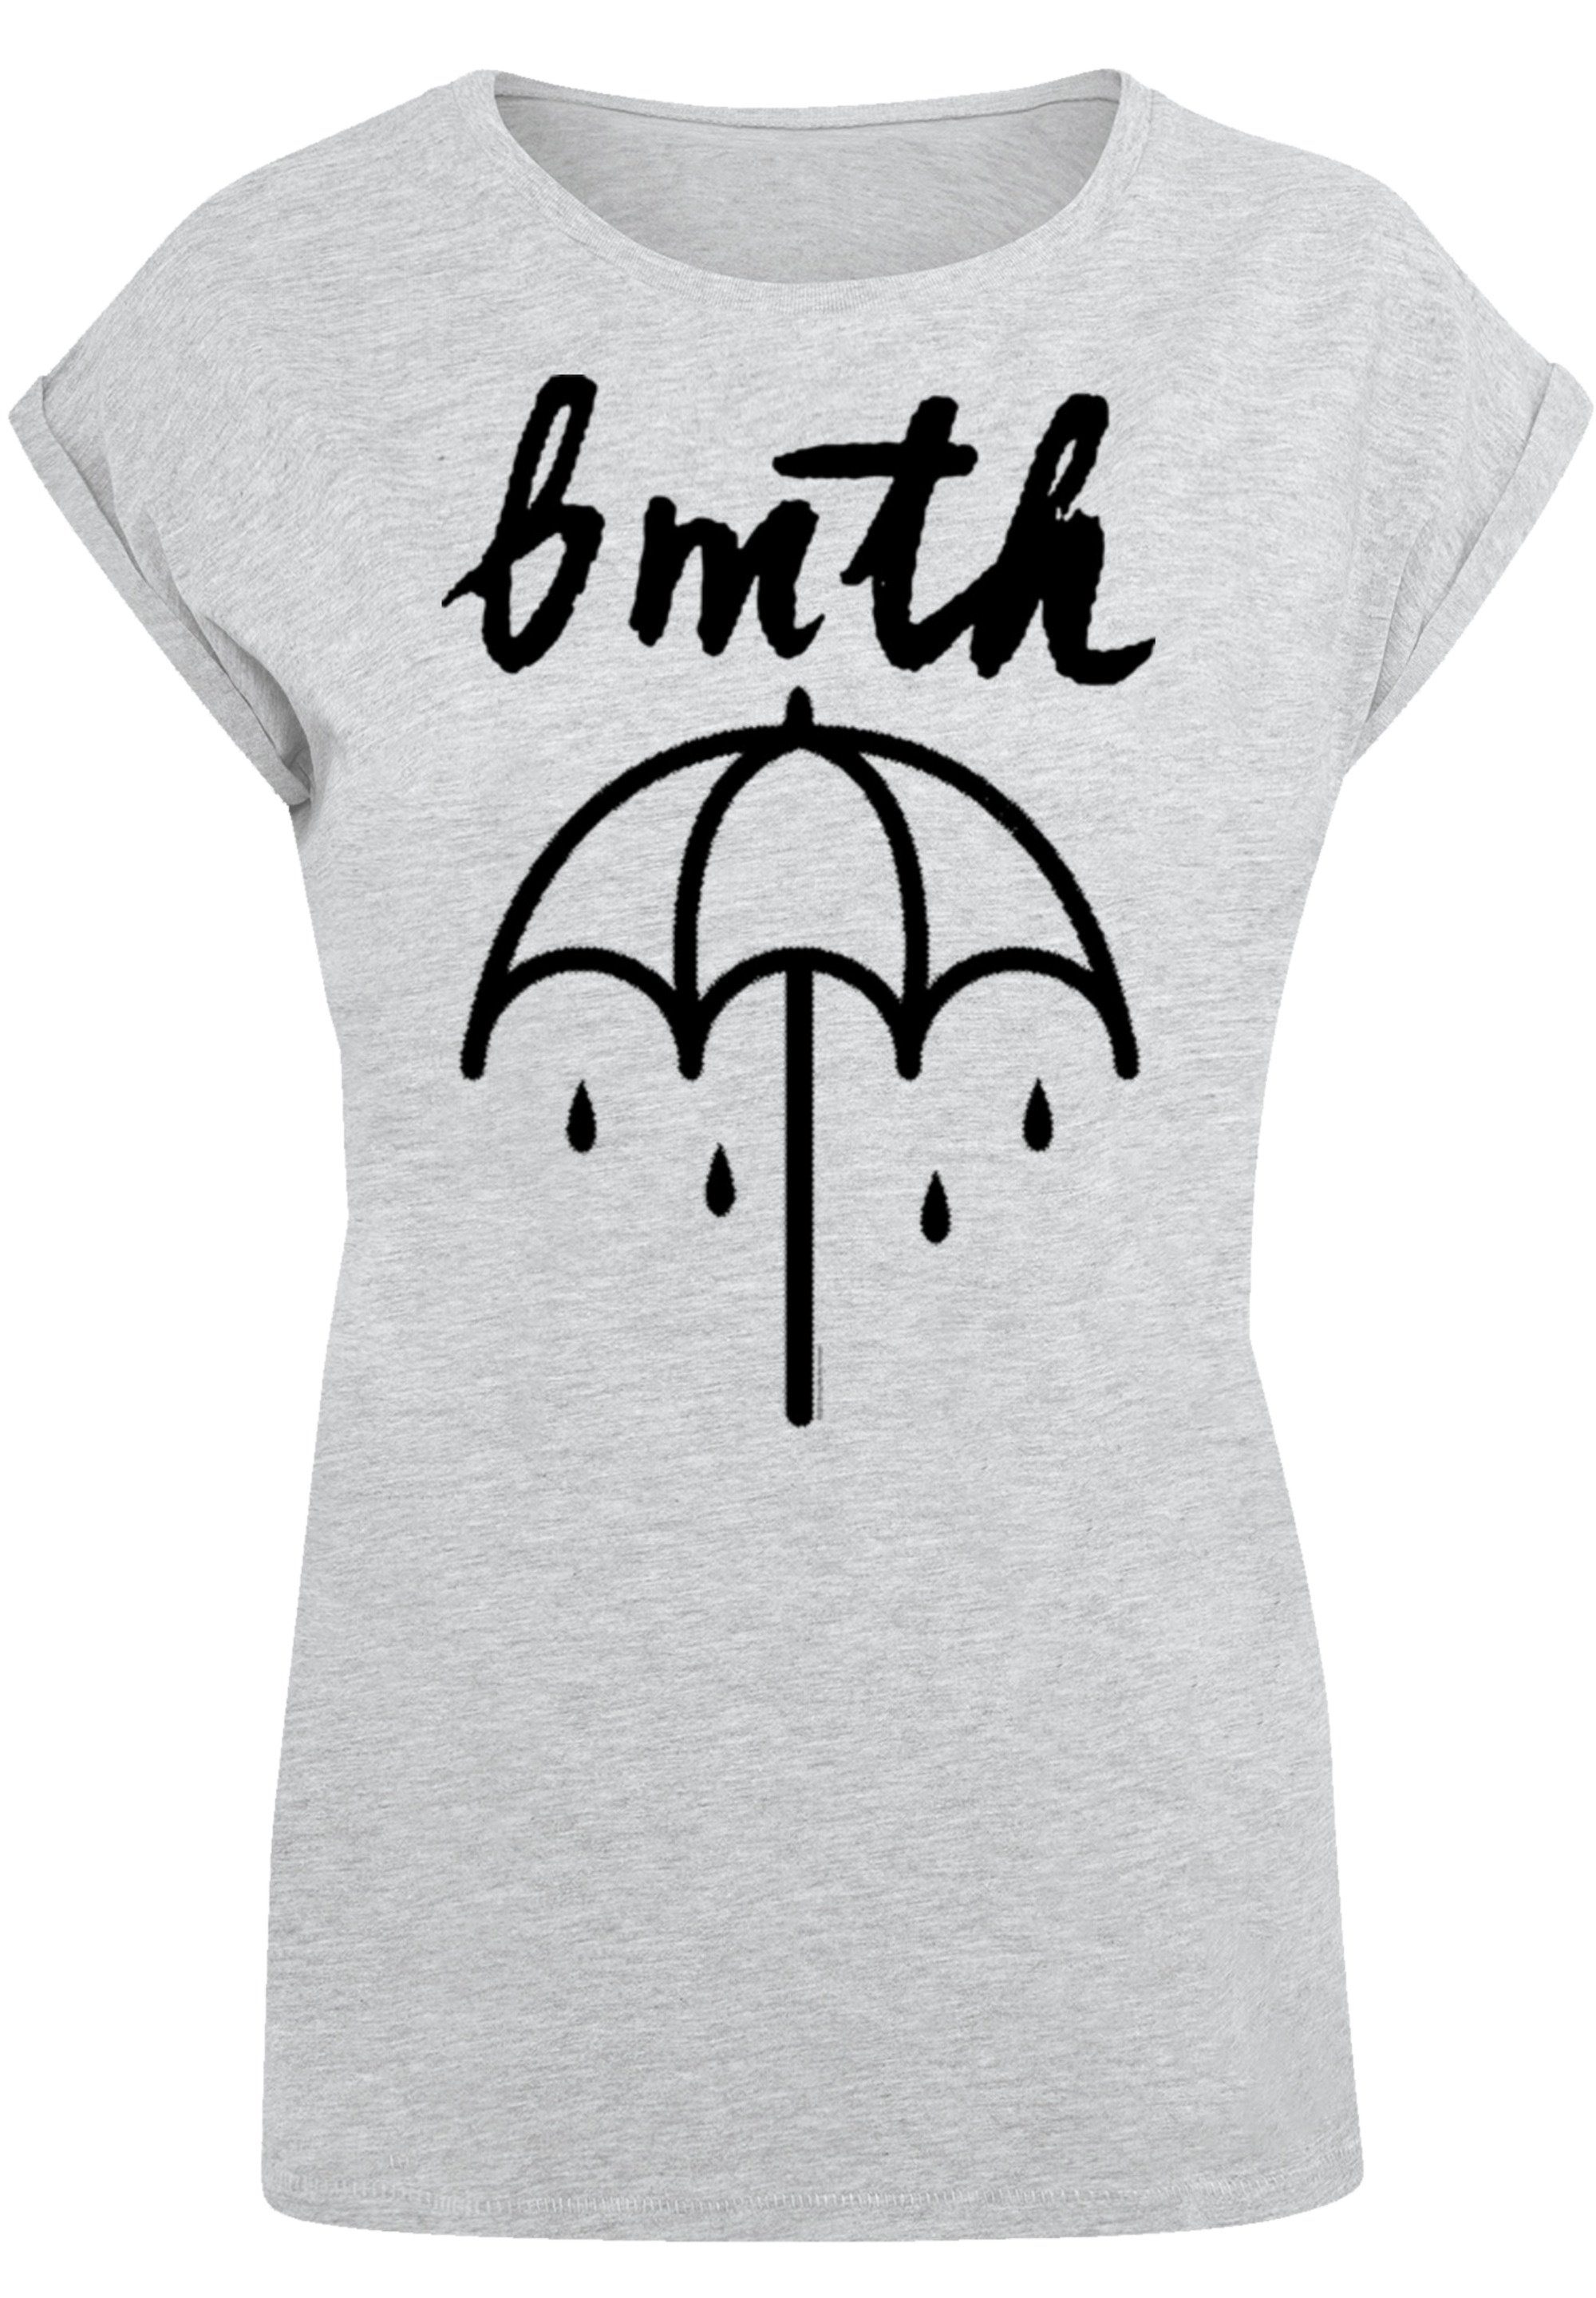 Band Qualität, Umbrella T-Shirt BMTH F4NT4STIC heather grey Rock-Musik, Band Metal Premium